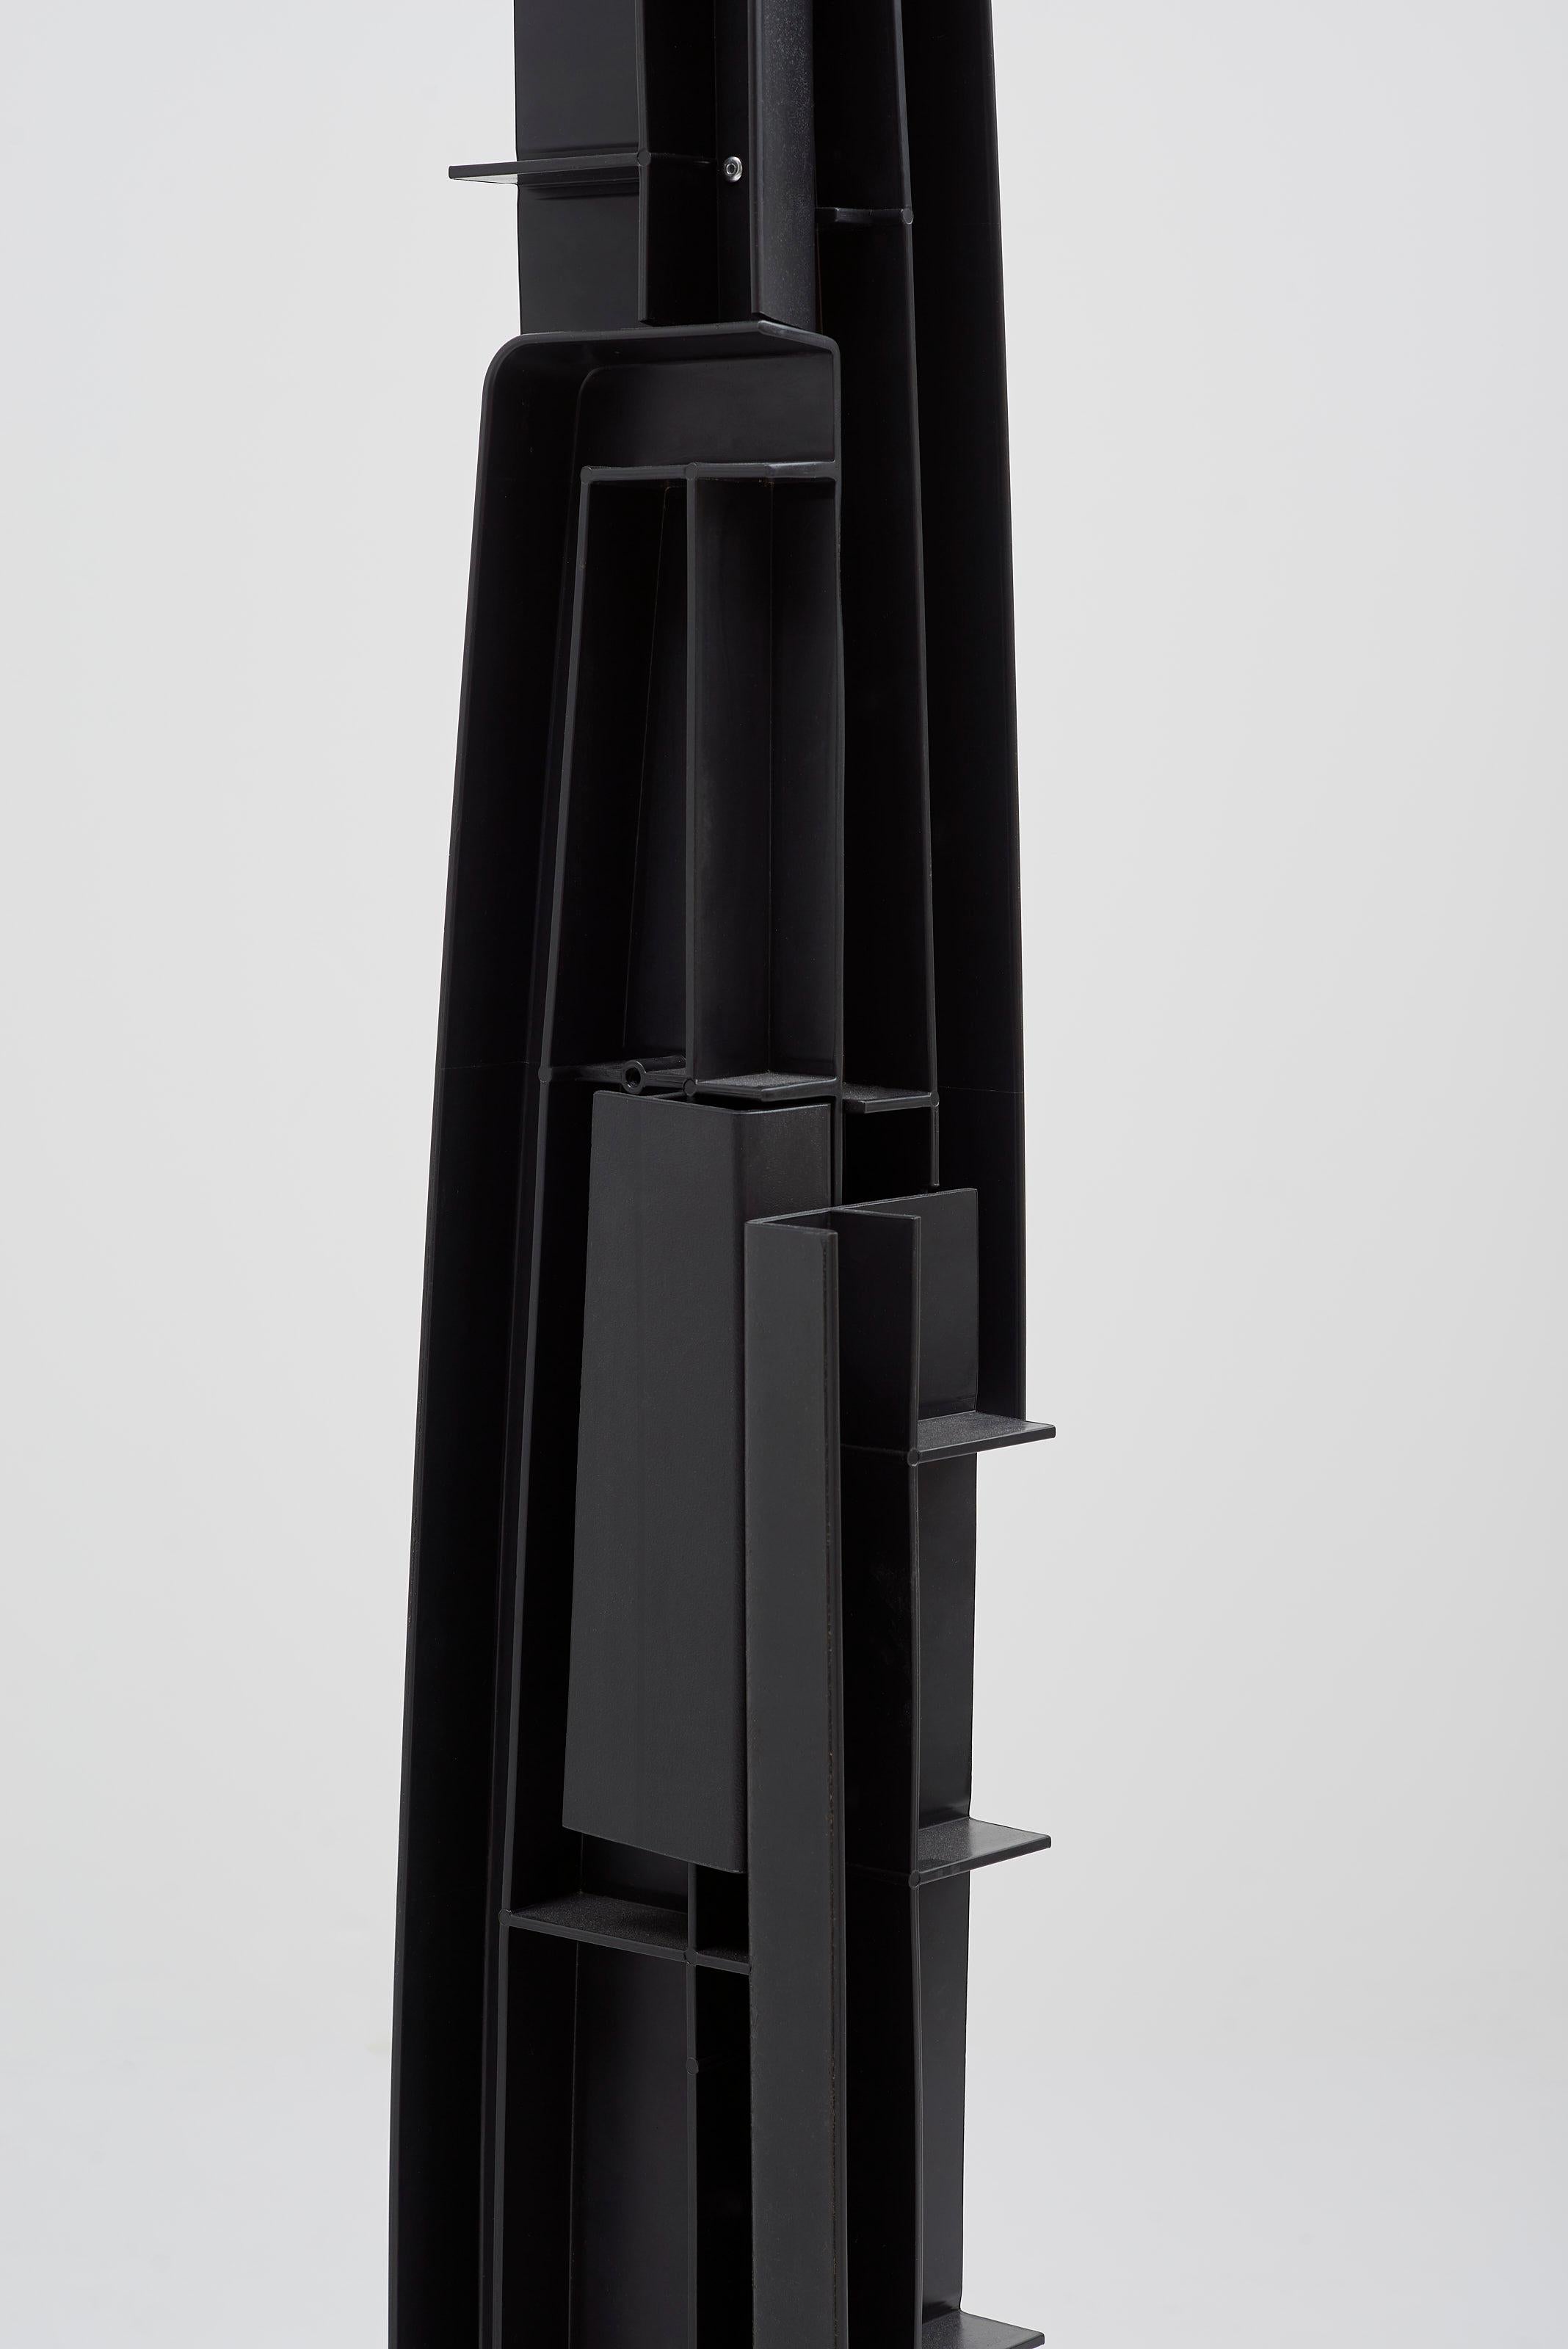 Dutch Inside-Out Tower Lamp, Dark Edition, Pierre Castignola For Sale